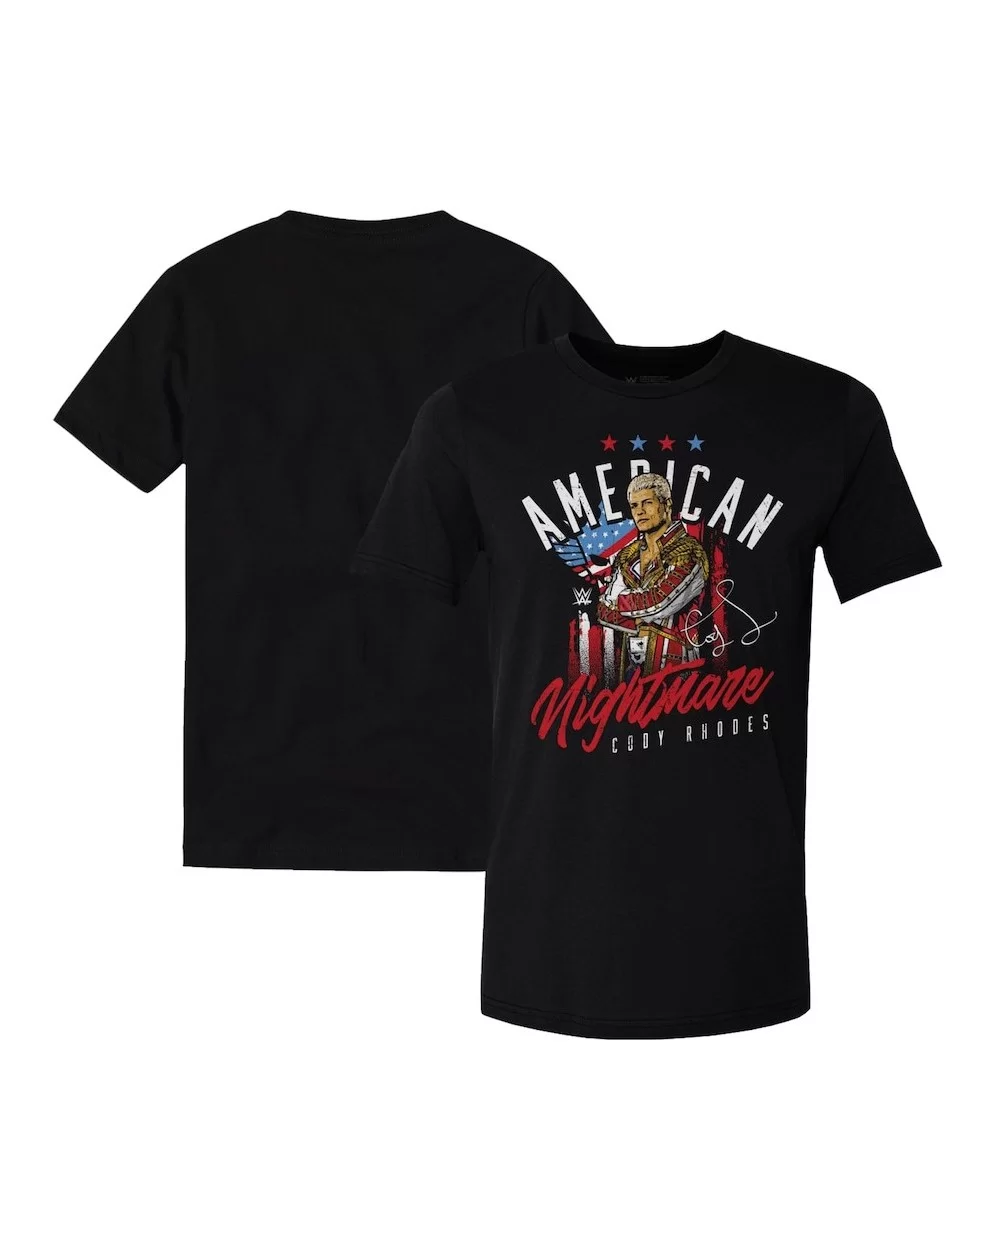 Men's Black Cody Rhodes Vintage Homage T-Shirt $11.28 Apparel